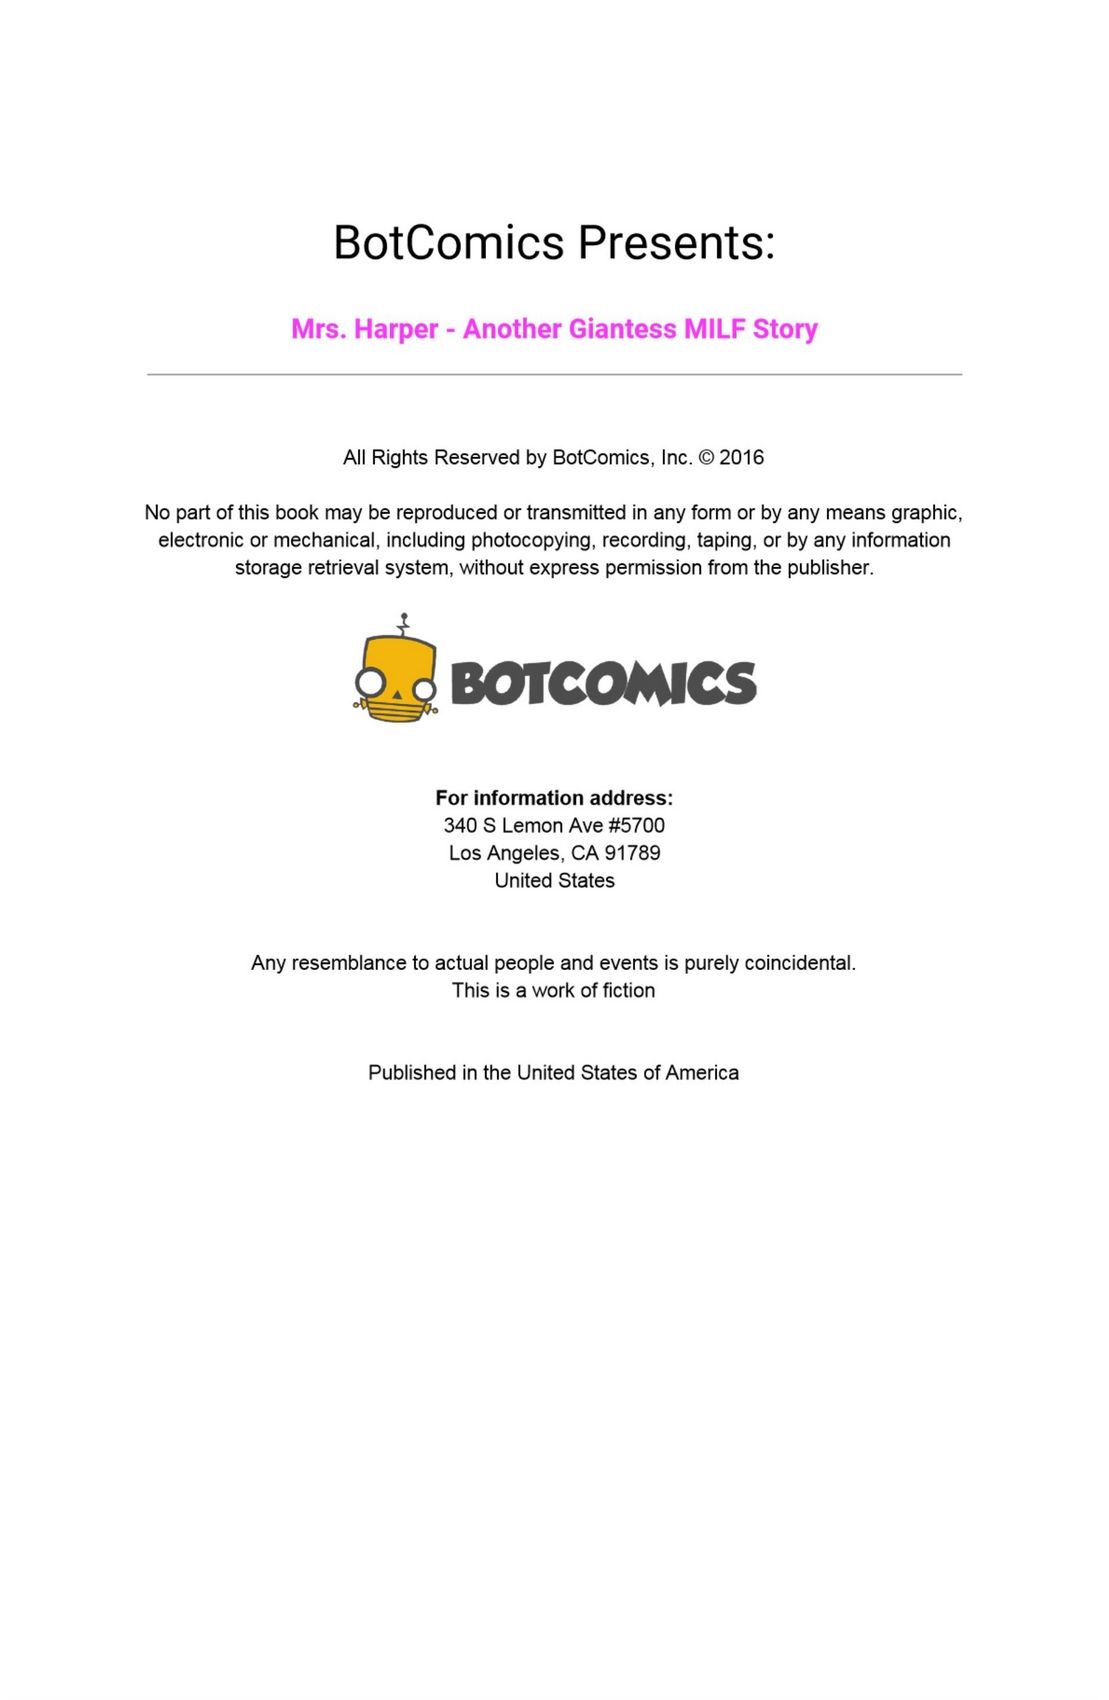 BotComics - Mrs. Harper Issue 3 page 2